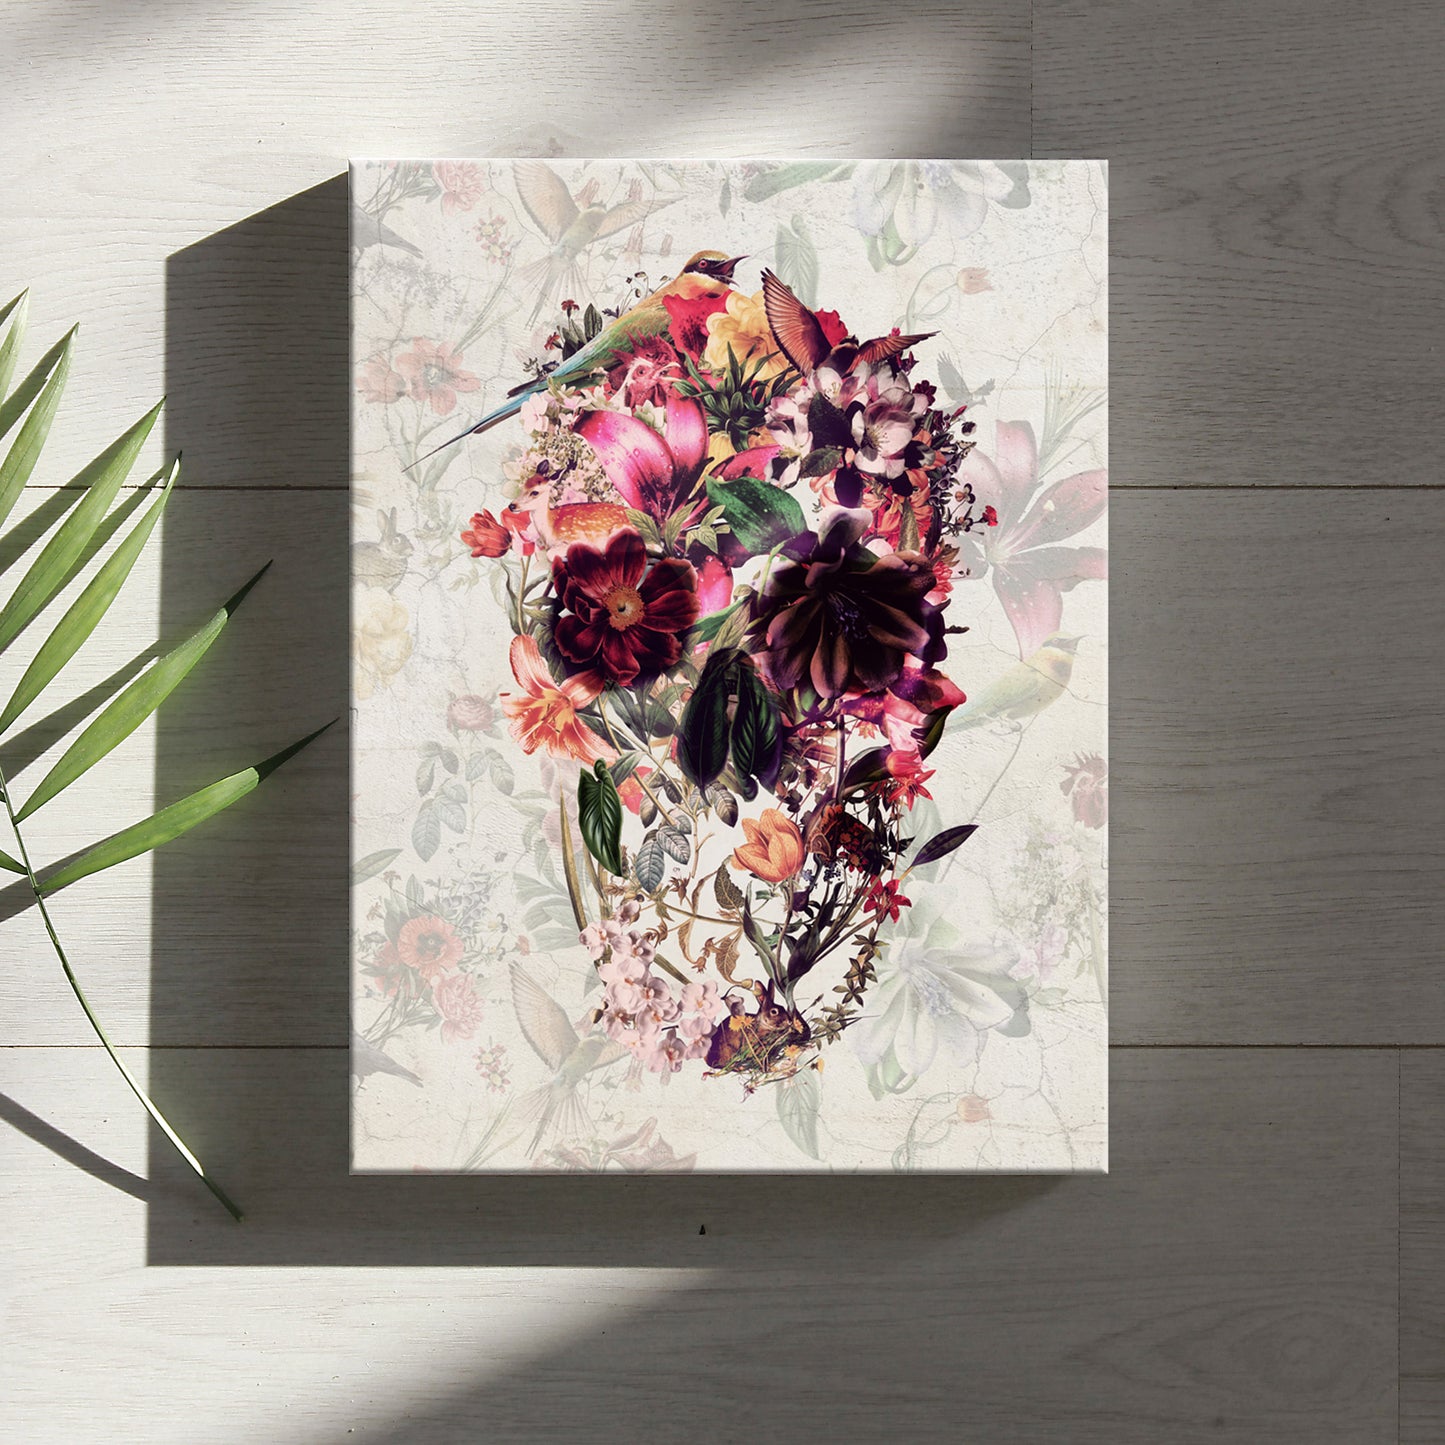 New Skull Canvas Print, Flower Skull Canvas Art Print, Gothic Sugar Skull Canvas Art Home Decor Gift, Floral Skull Authentic Canvas Wall Art